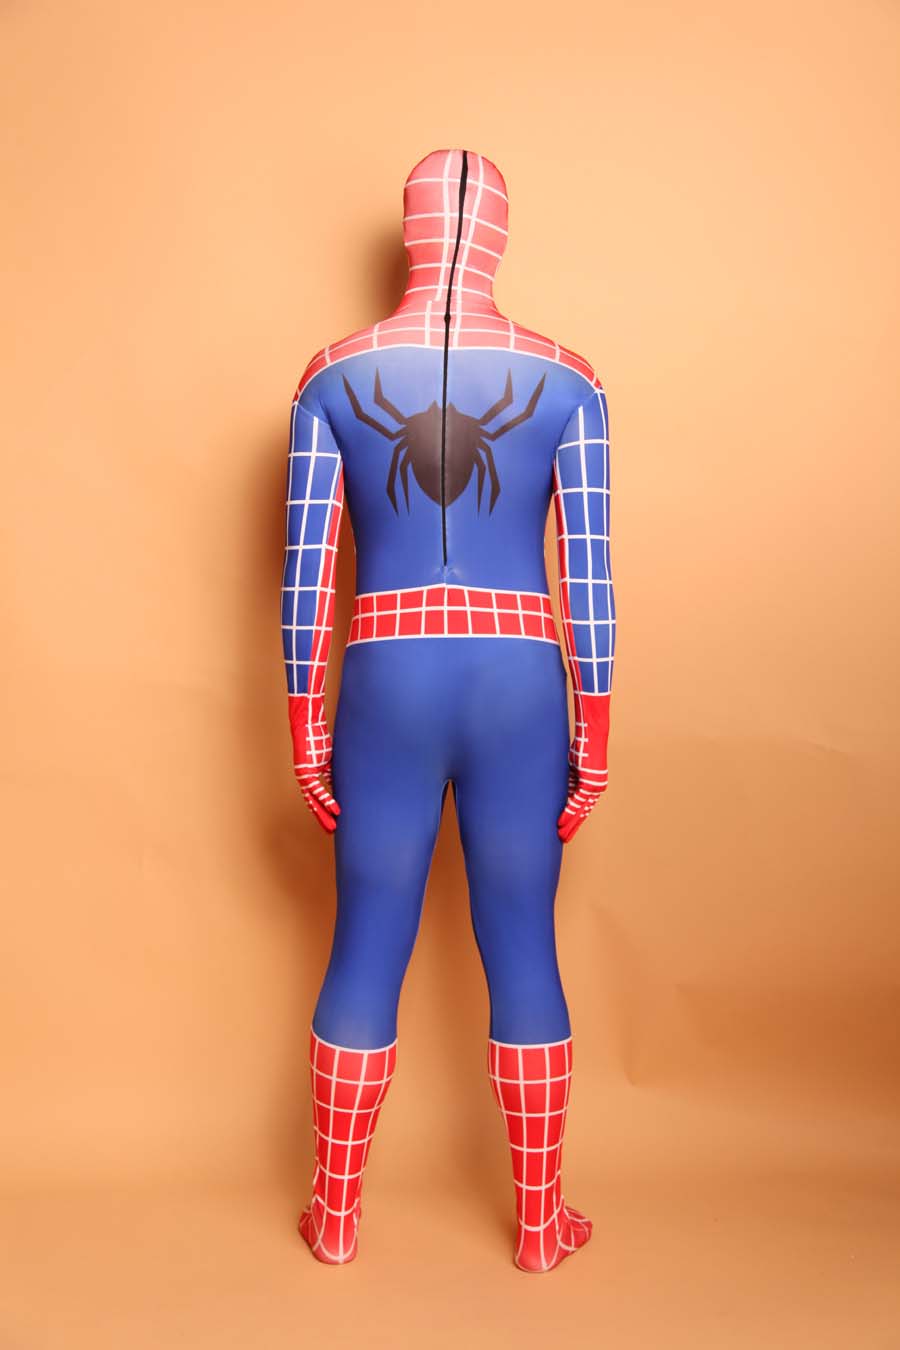 Classic Red And Blue Spiderman Superhero Costume